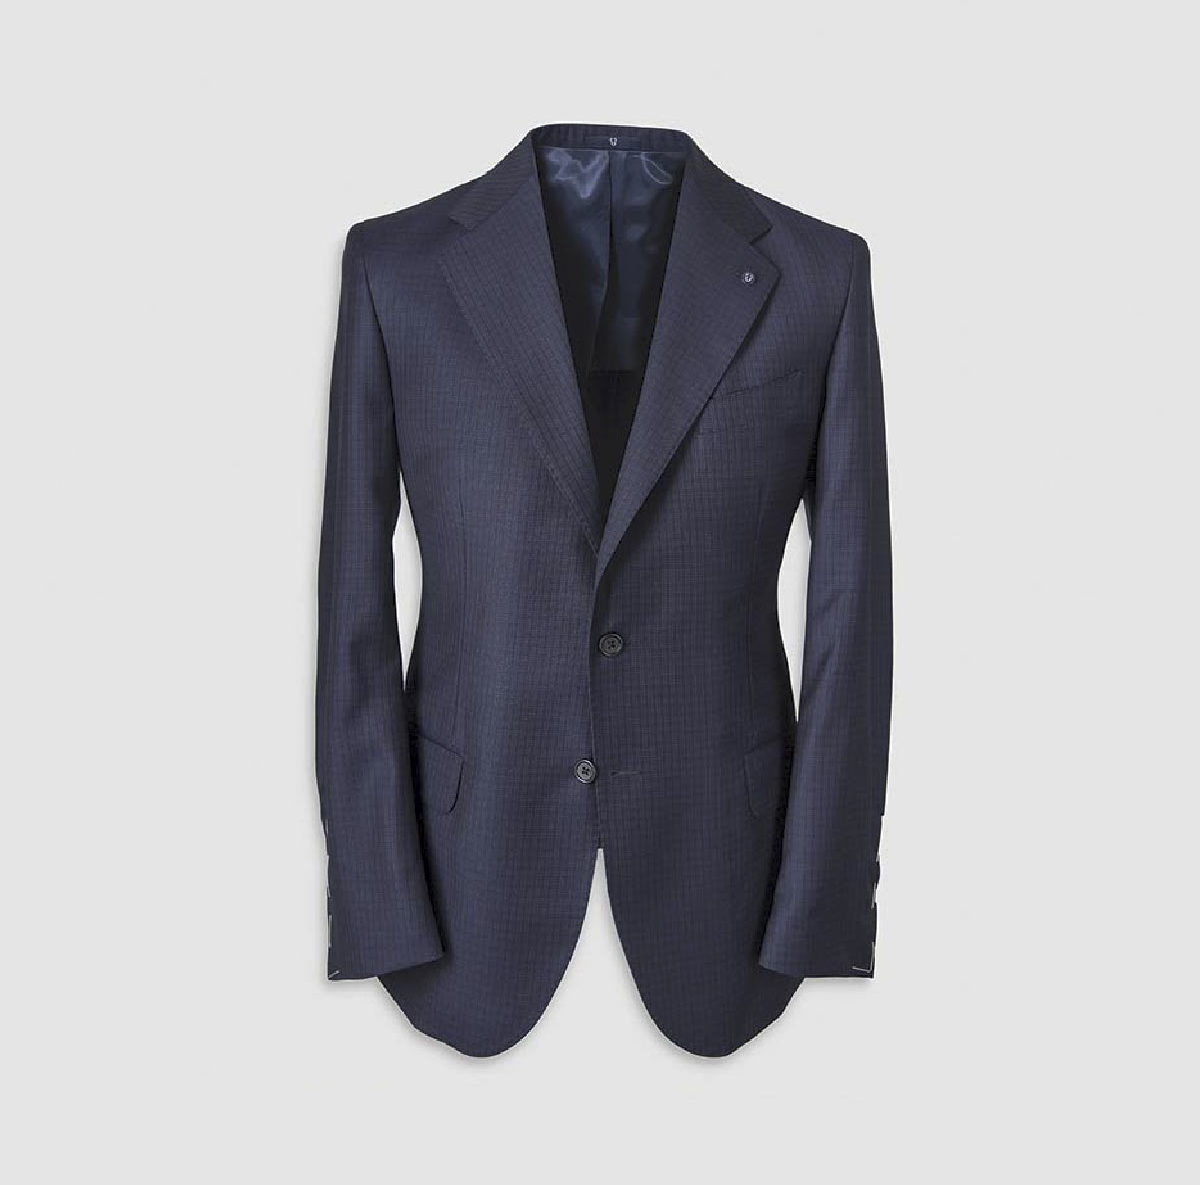 Blue Gingham Pattern Blazer in 130s Four Seasons Wool Melillo 1970 on sale 2022